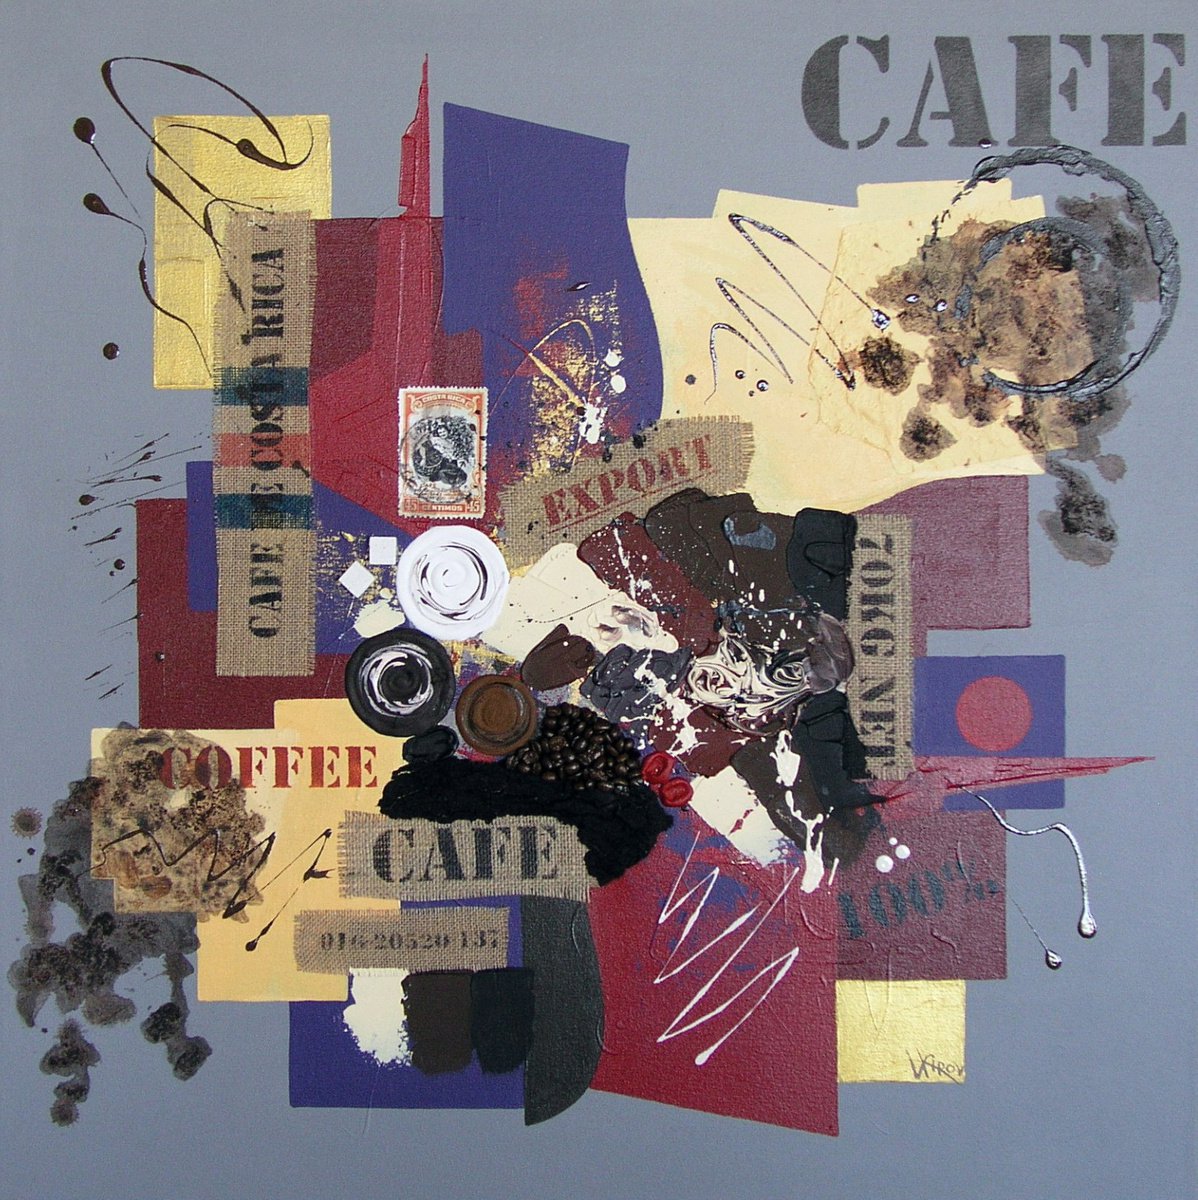 Cafe Collage L3 by Vasco Kirov